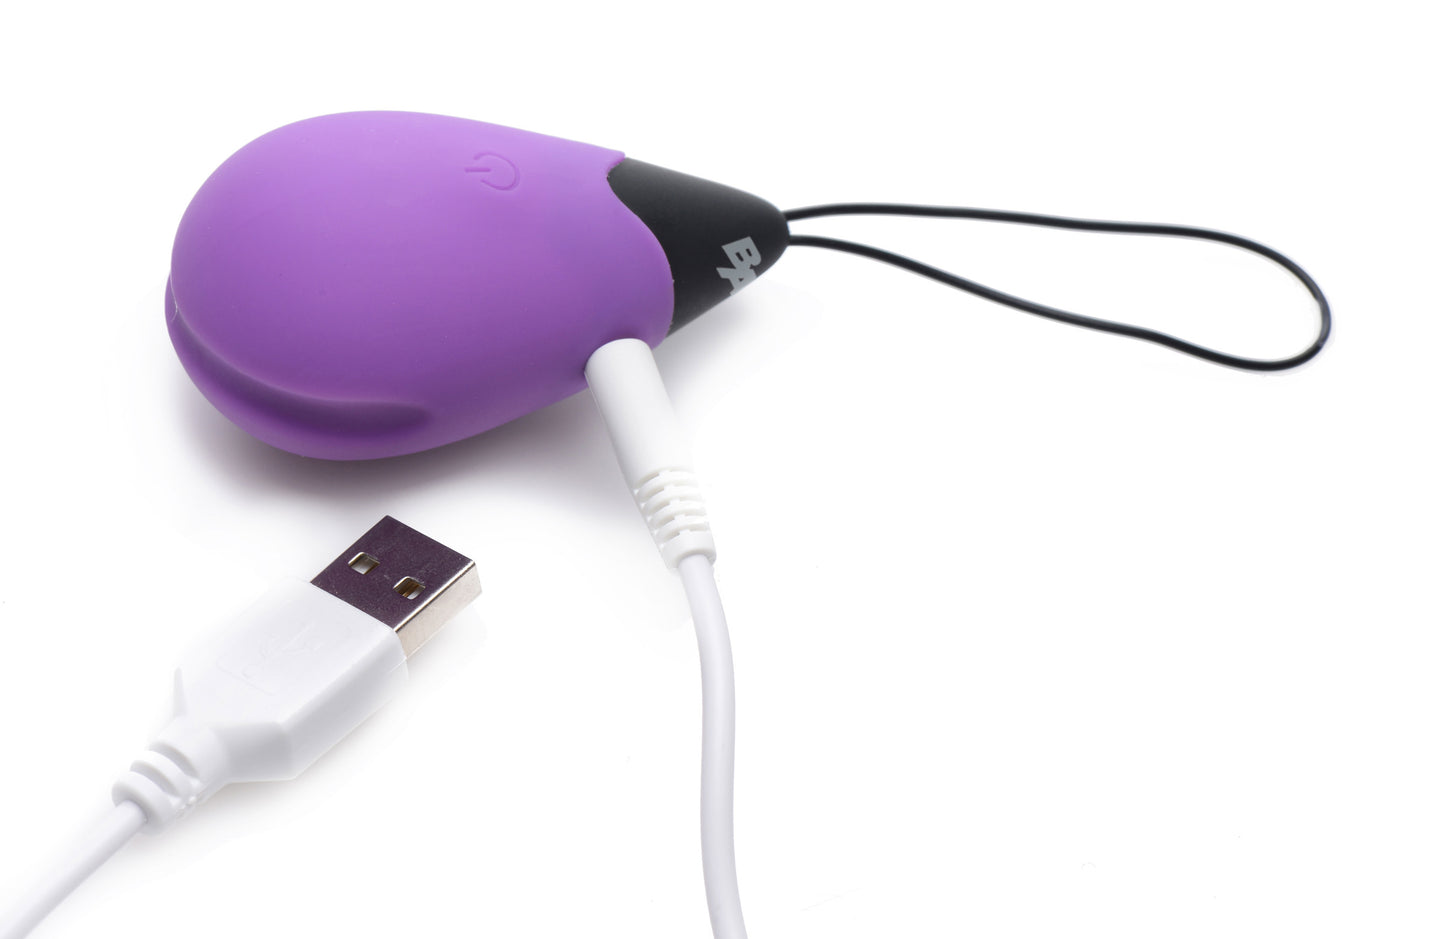 10x Silicone Vibrating Egg - Purple